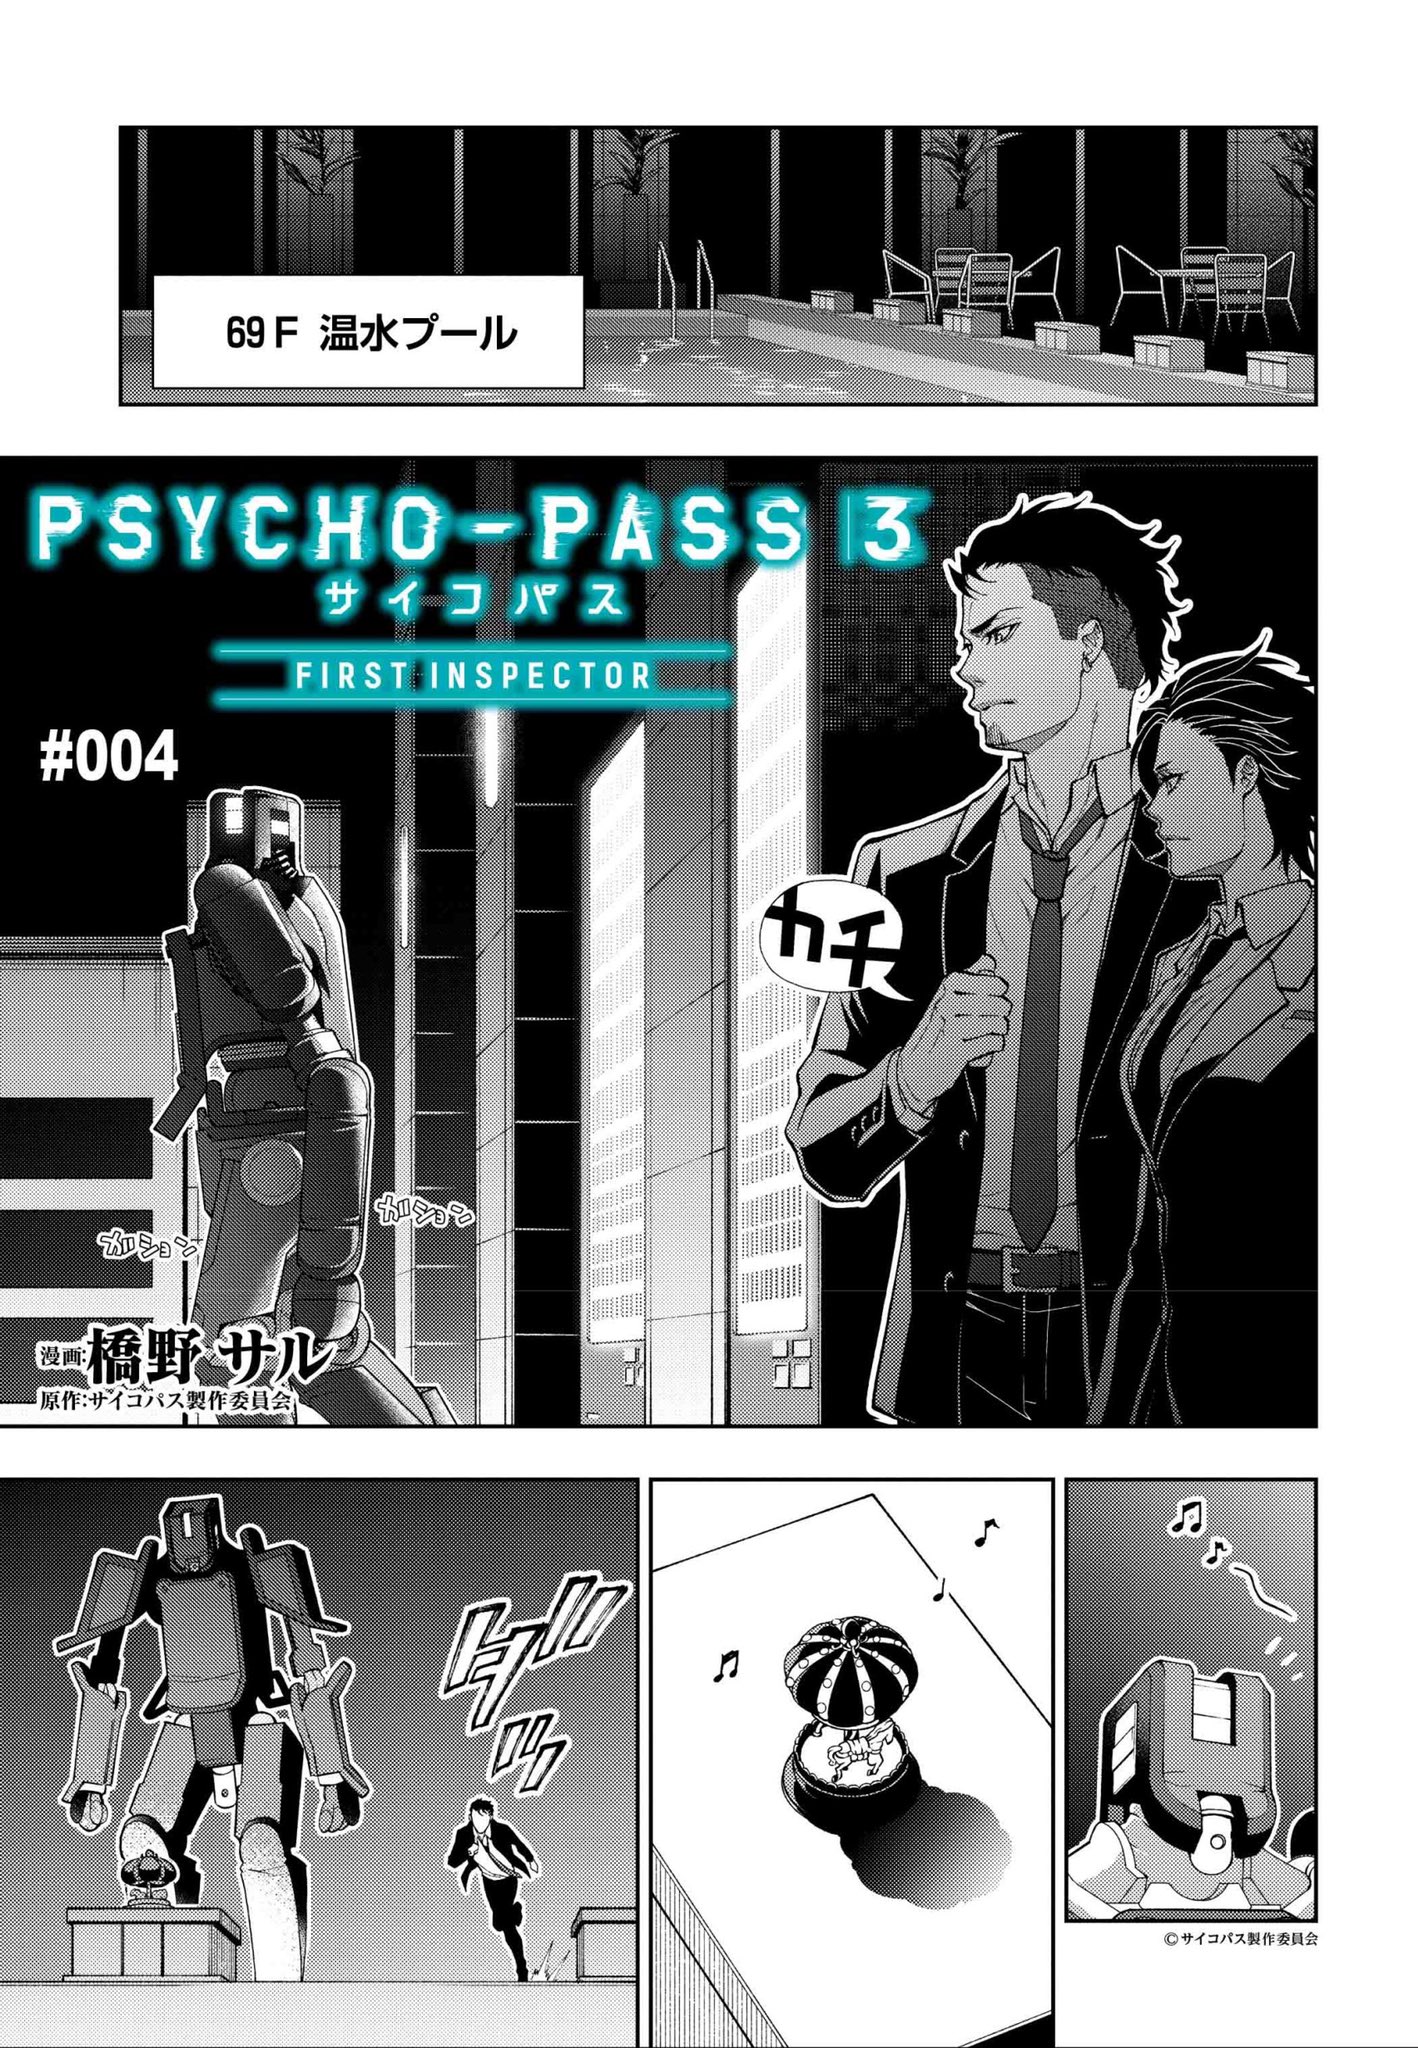 Psycho Pass サイコパス 公式 Psychopass Tv Twitter